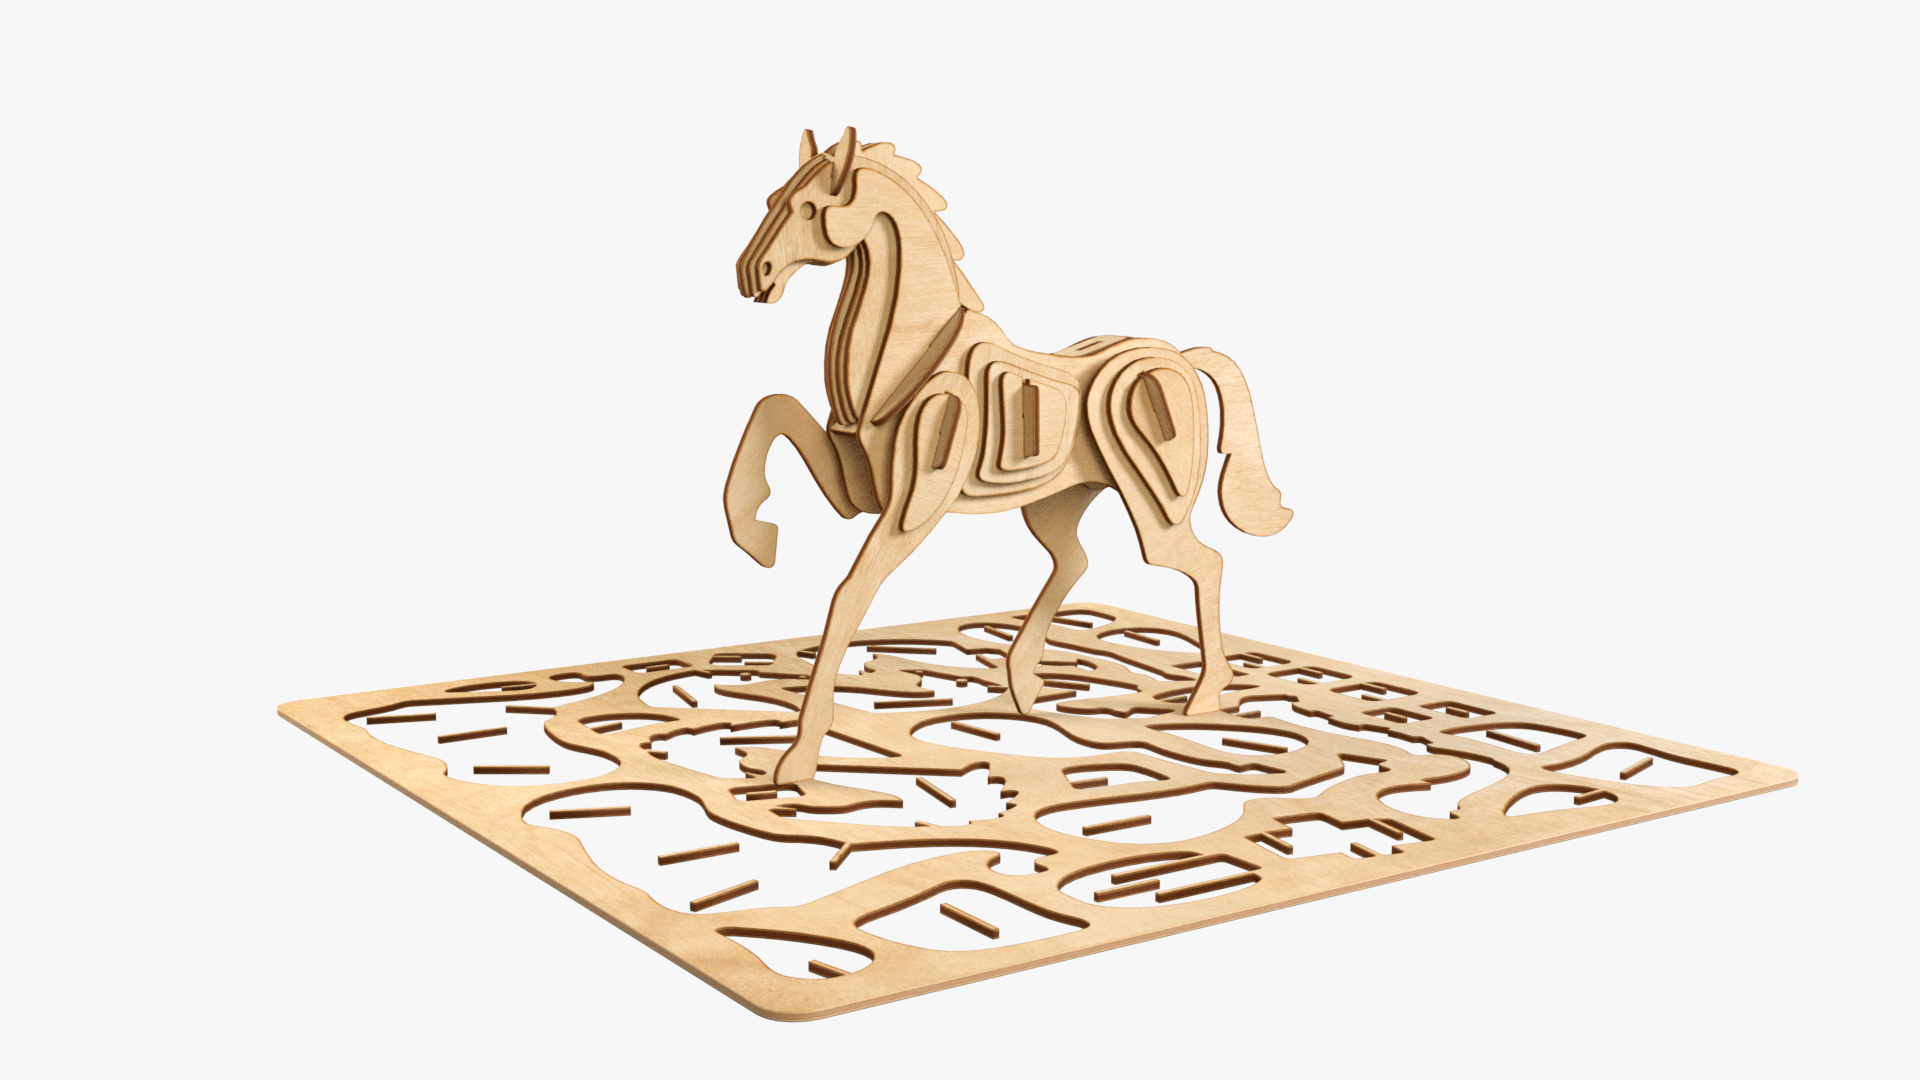 Horse Laser Cut Animation 3D Model - Turbosquid 1452683